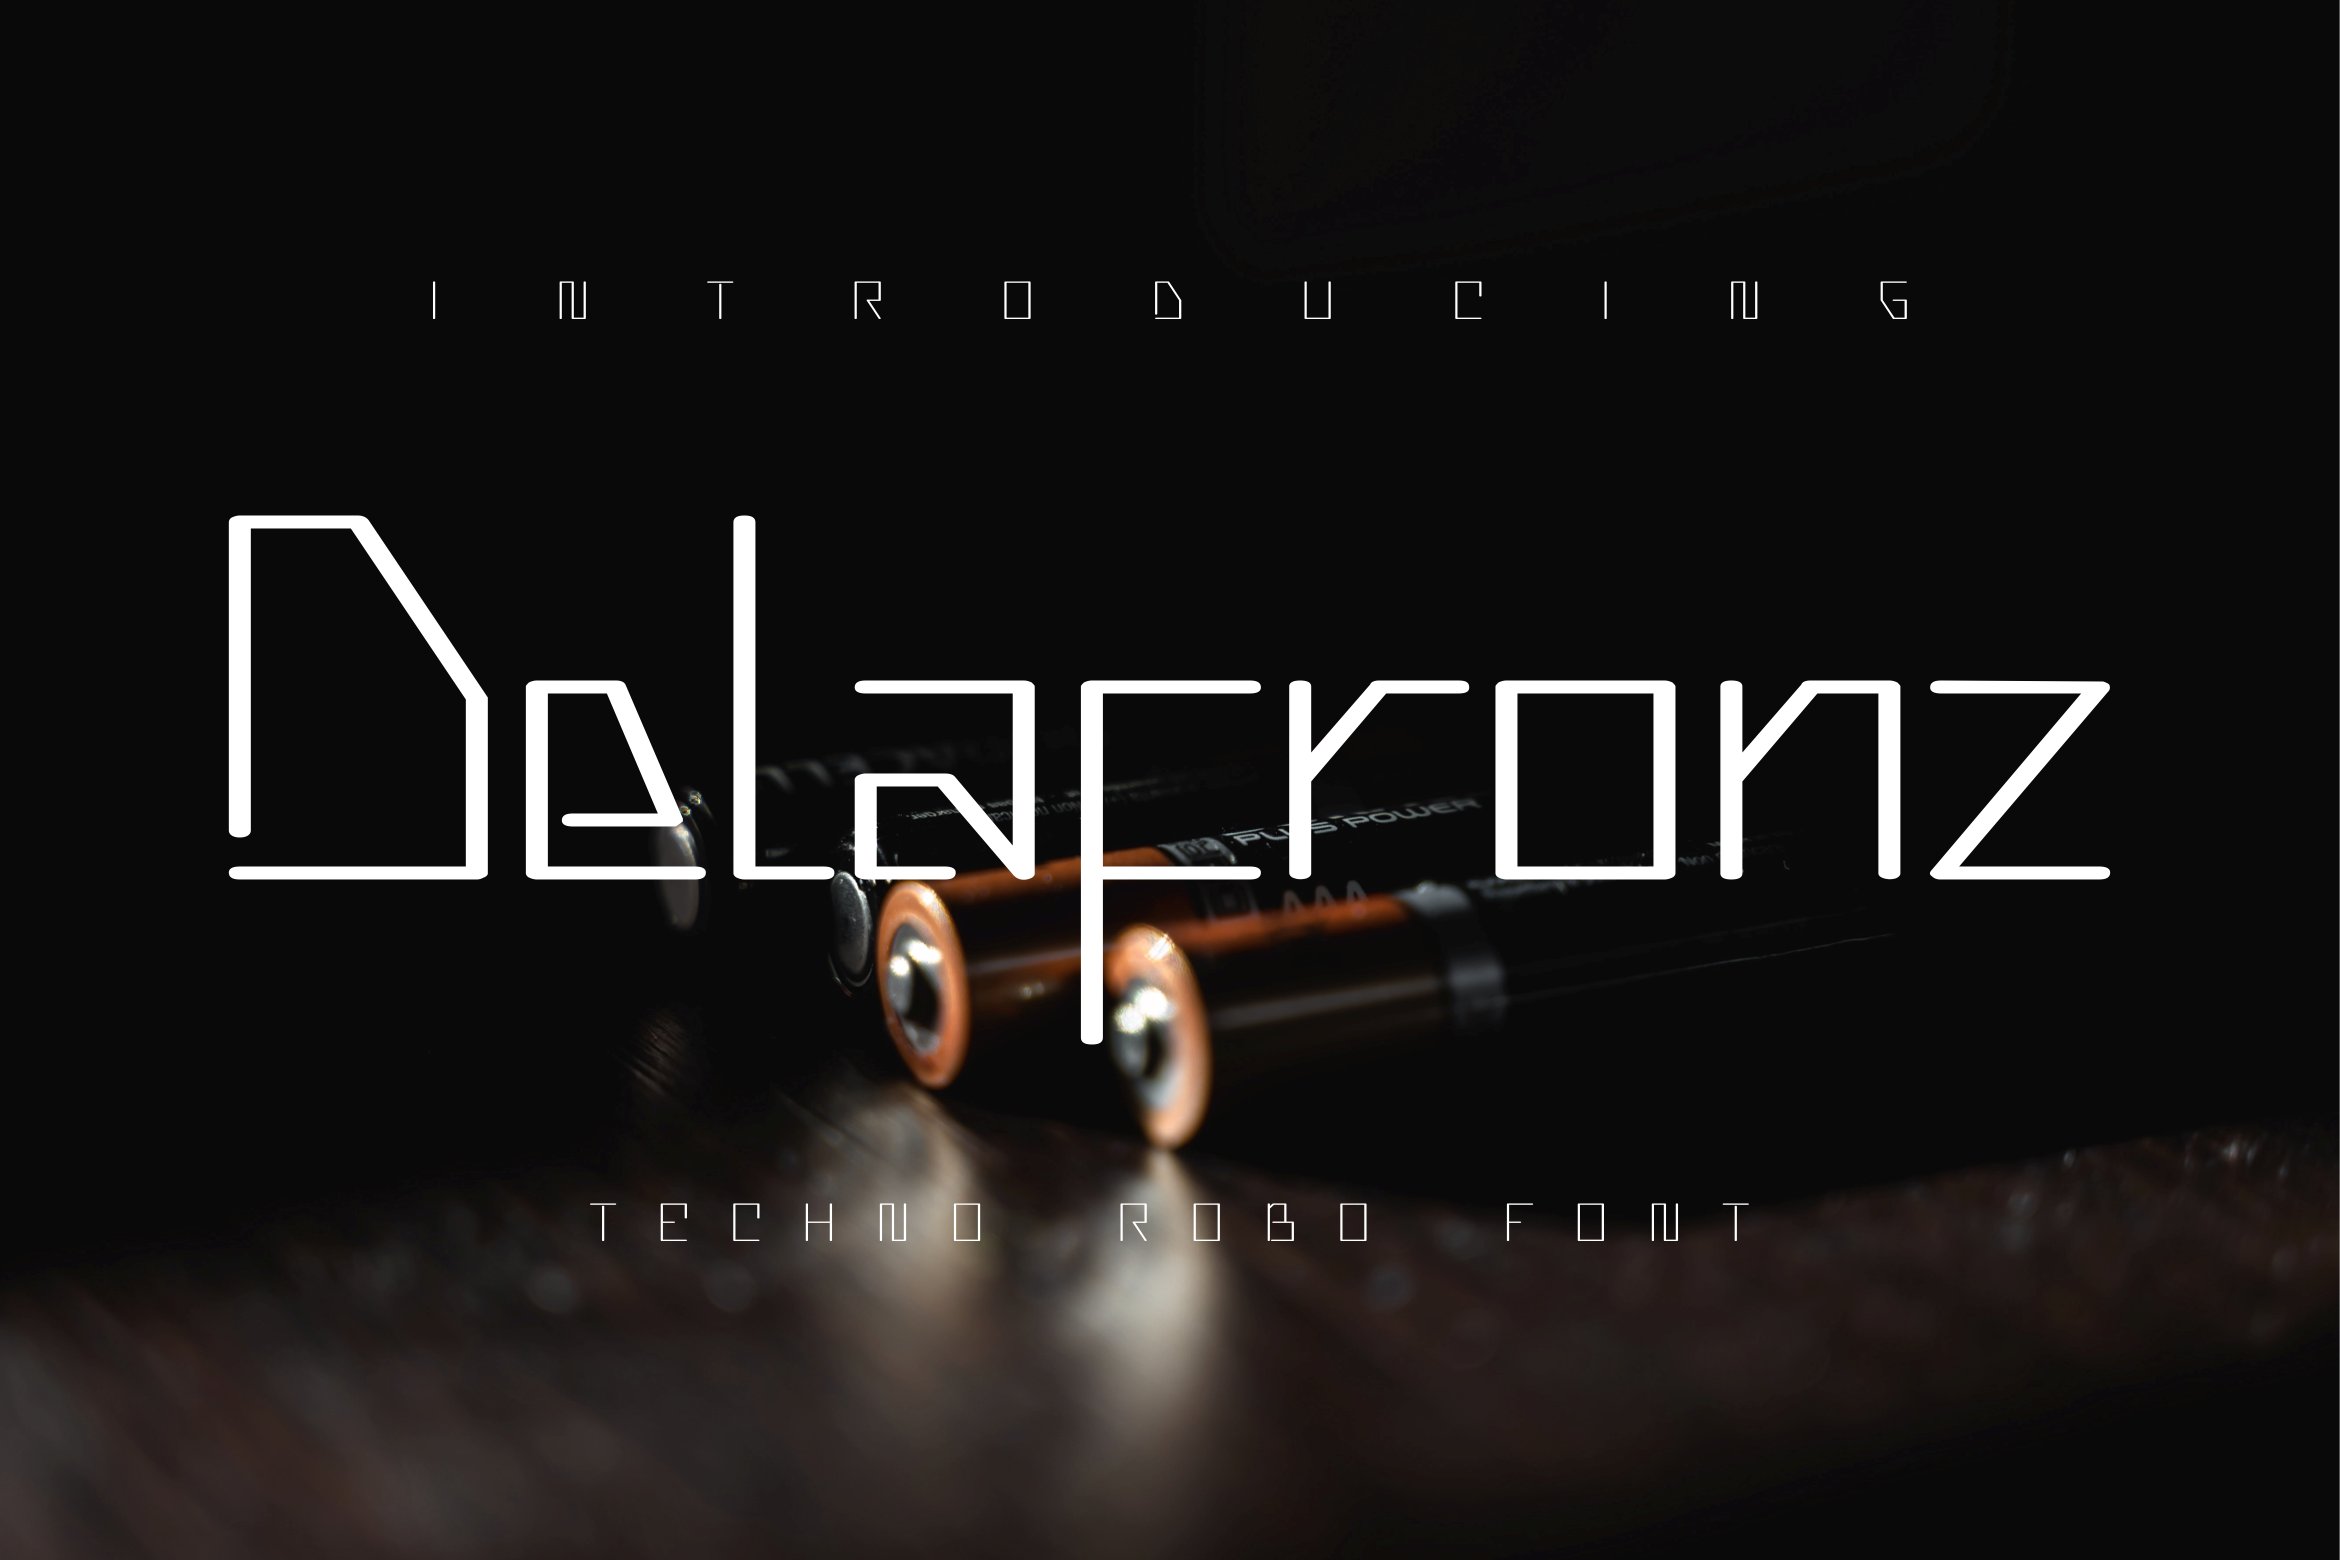 Delafronz Font cover image.